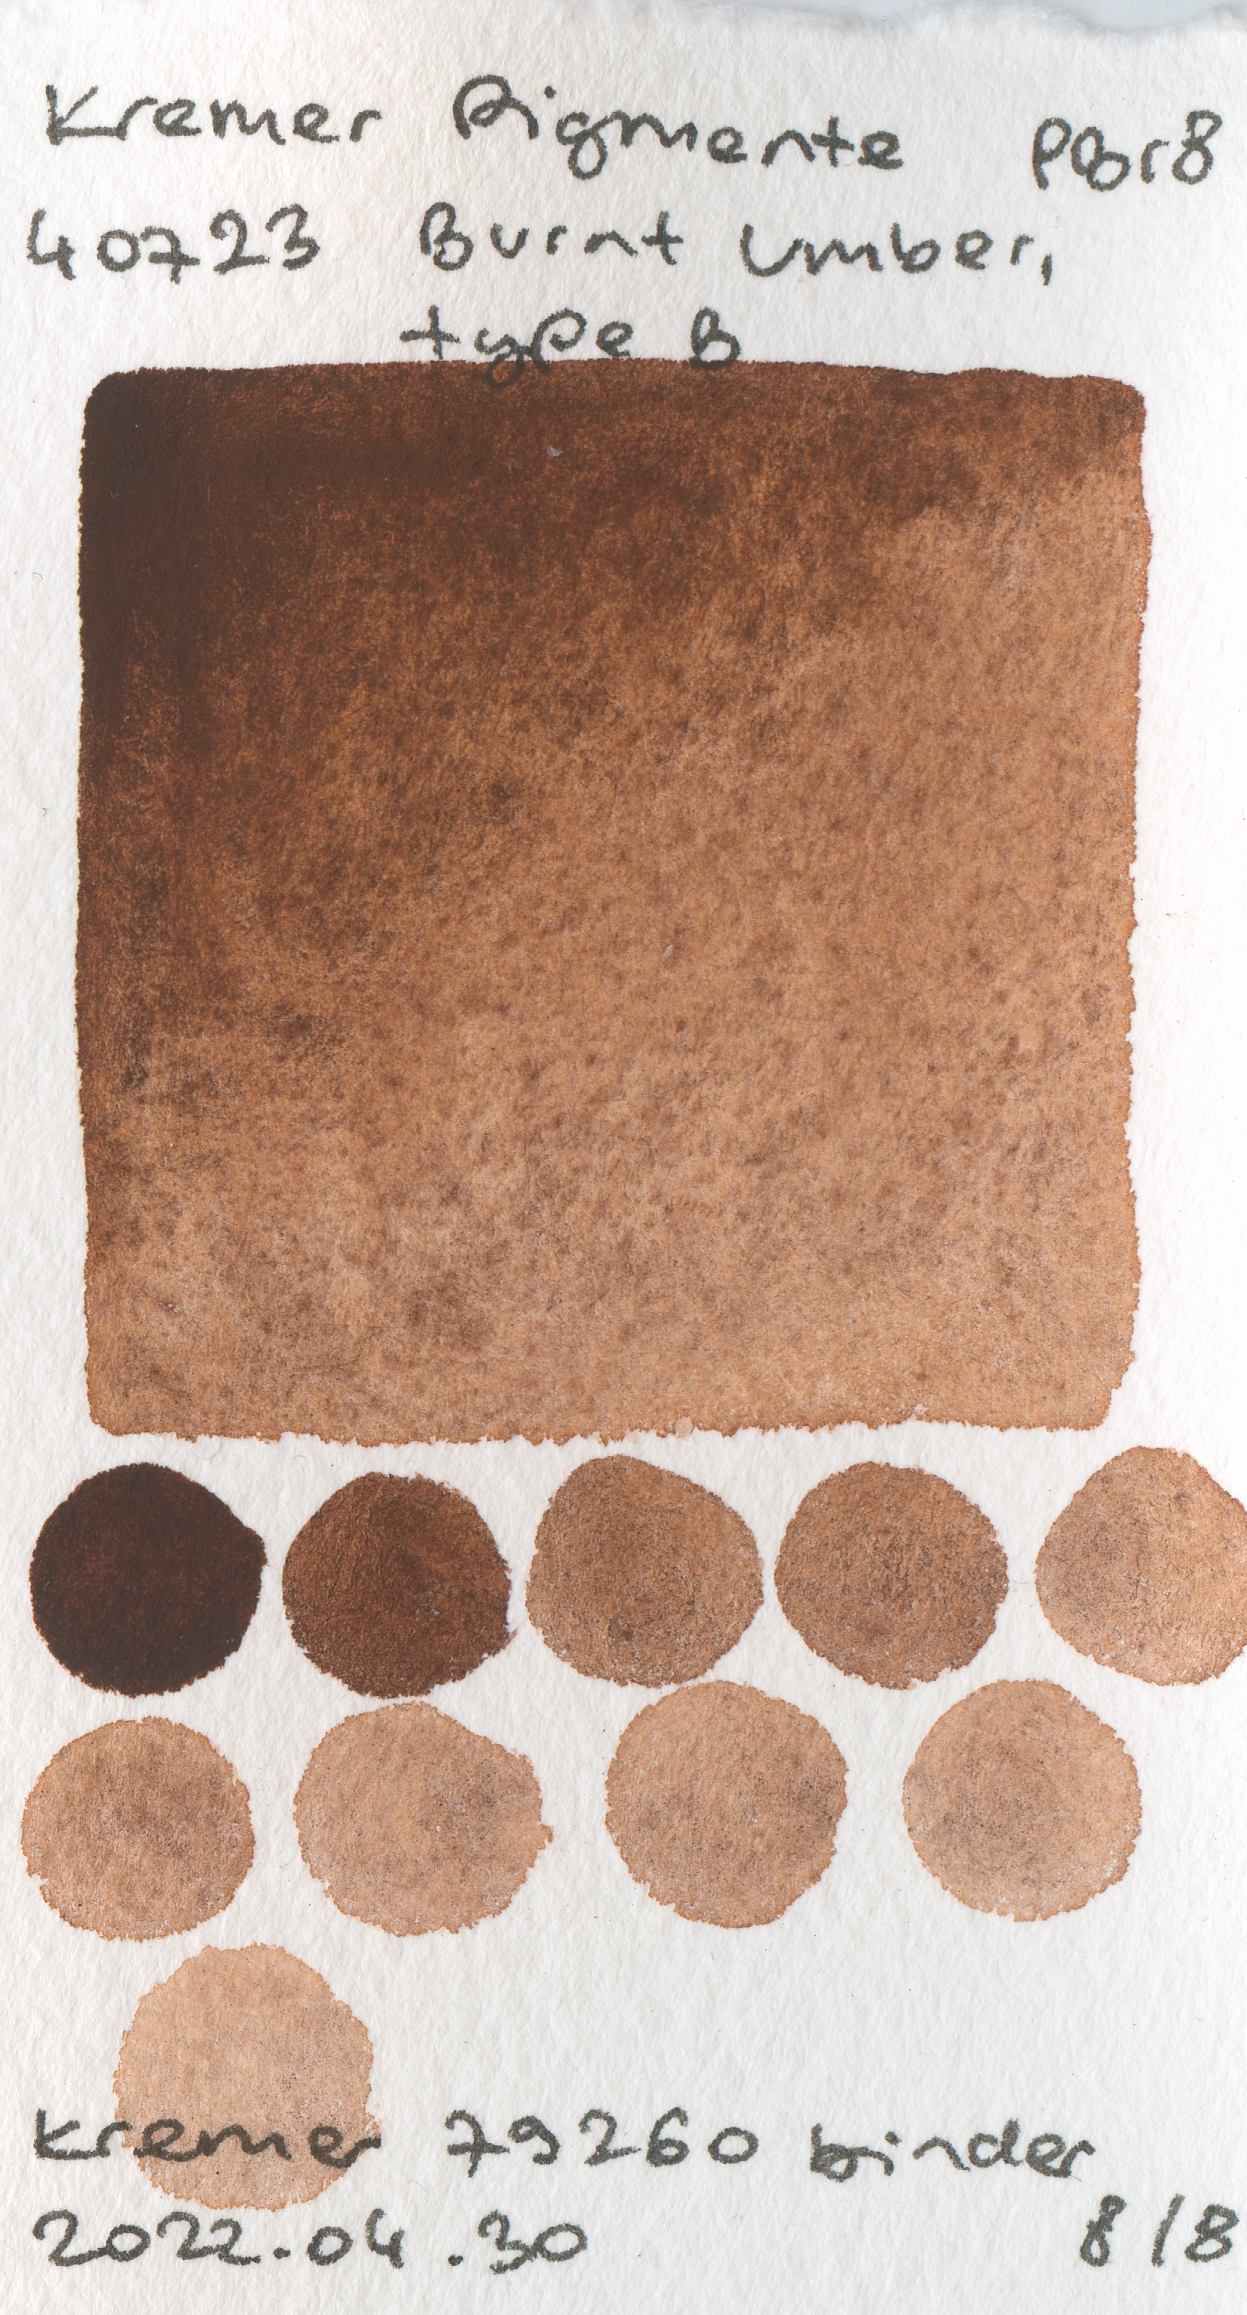 Kremer Pigmente [Dry] Pigments 40723 Burnt Umber type B PBr8 watercolor swatch